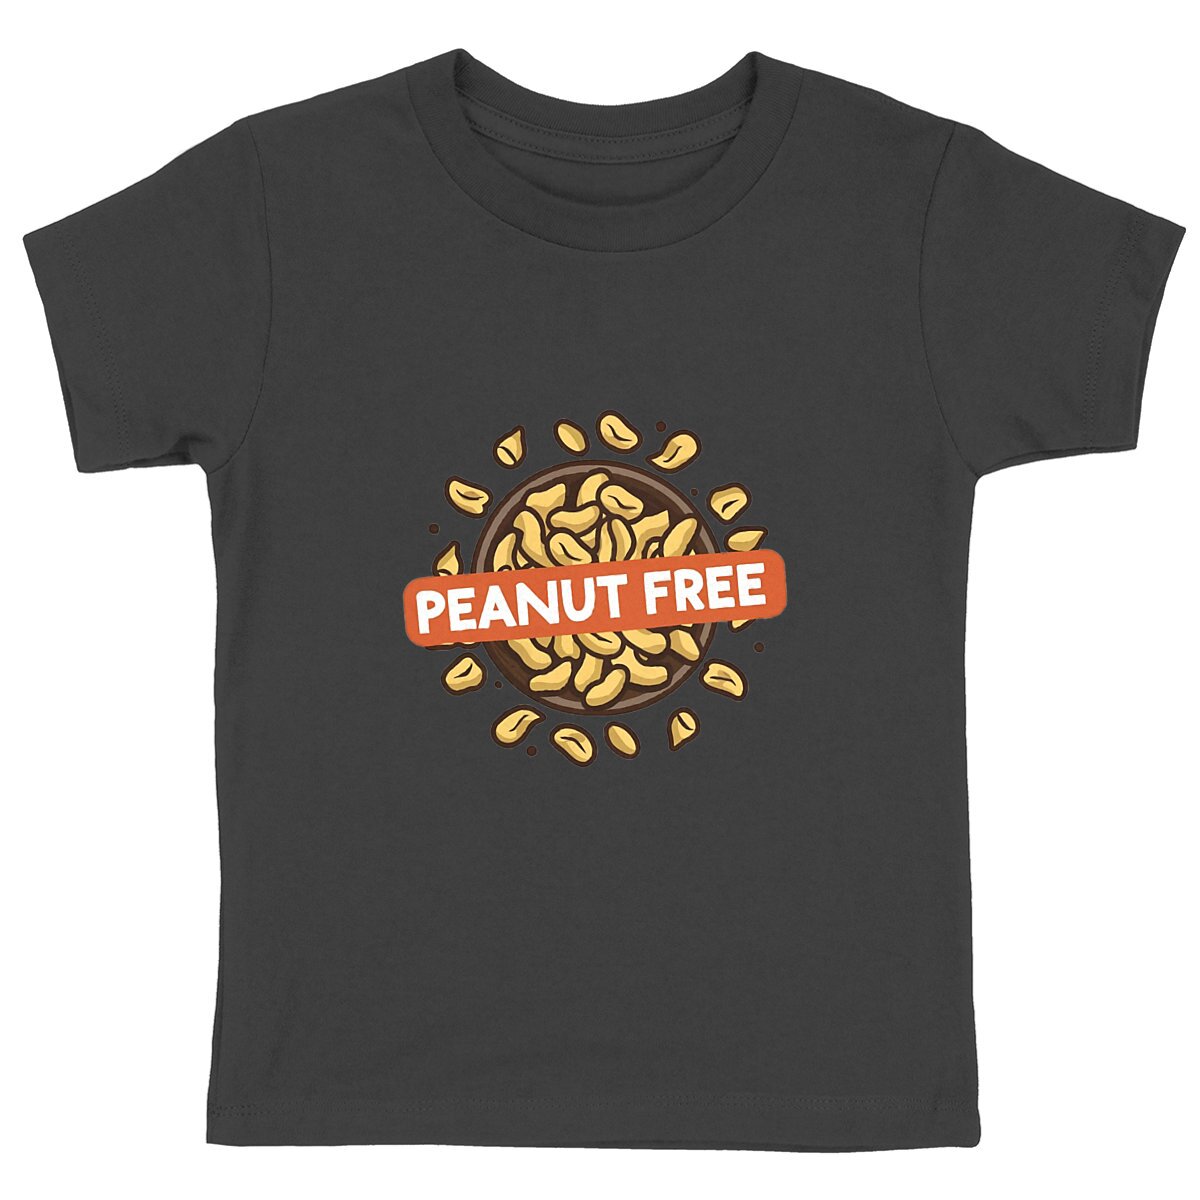 Peanut Free Organic Cotton Graphic Kid's Shirt | Hypoallergenic - Allergy Friendly - Naturally Free